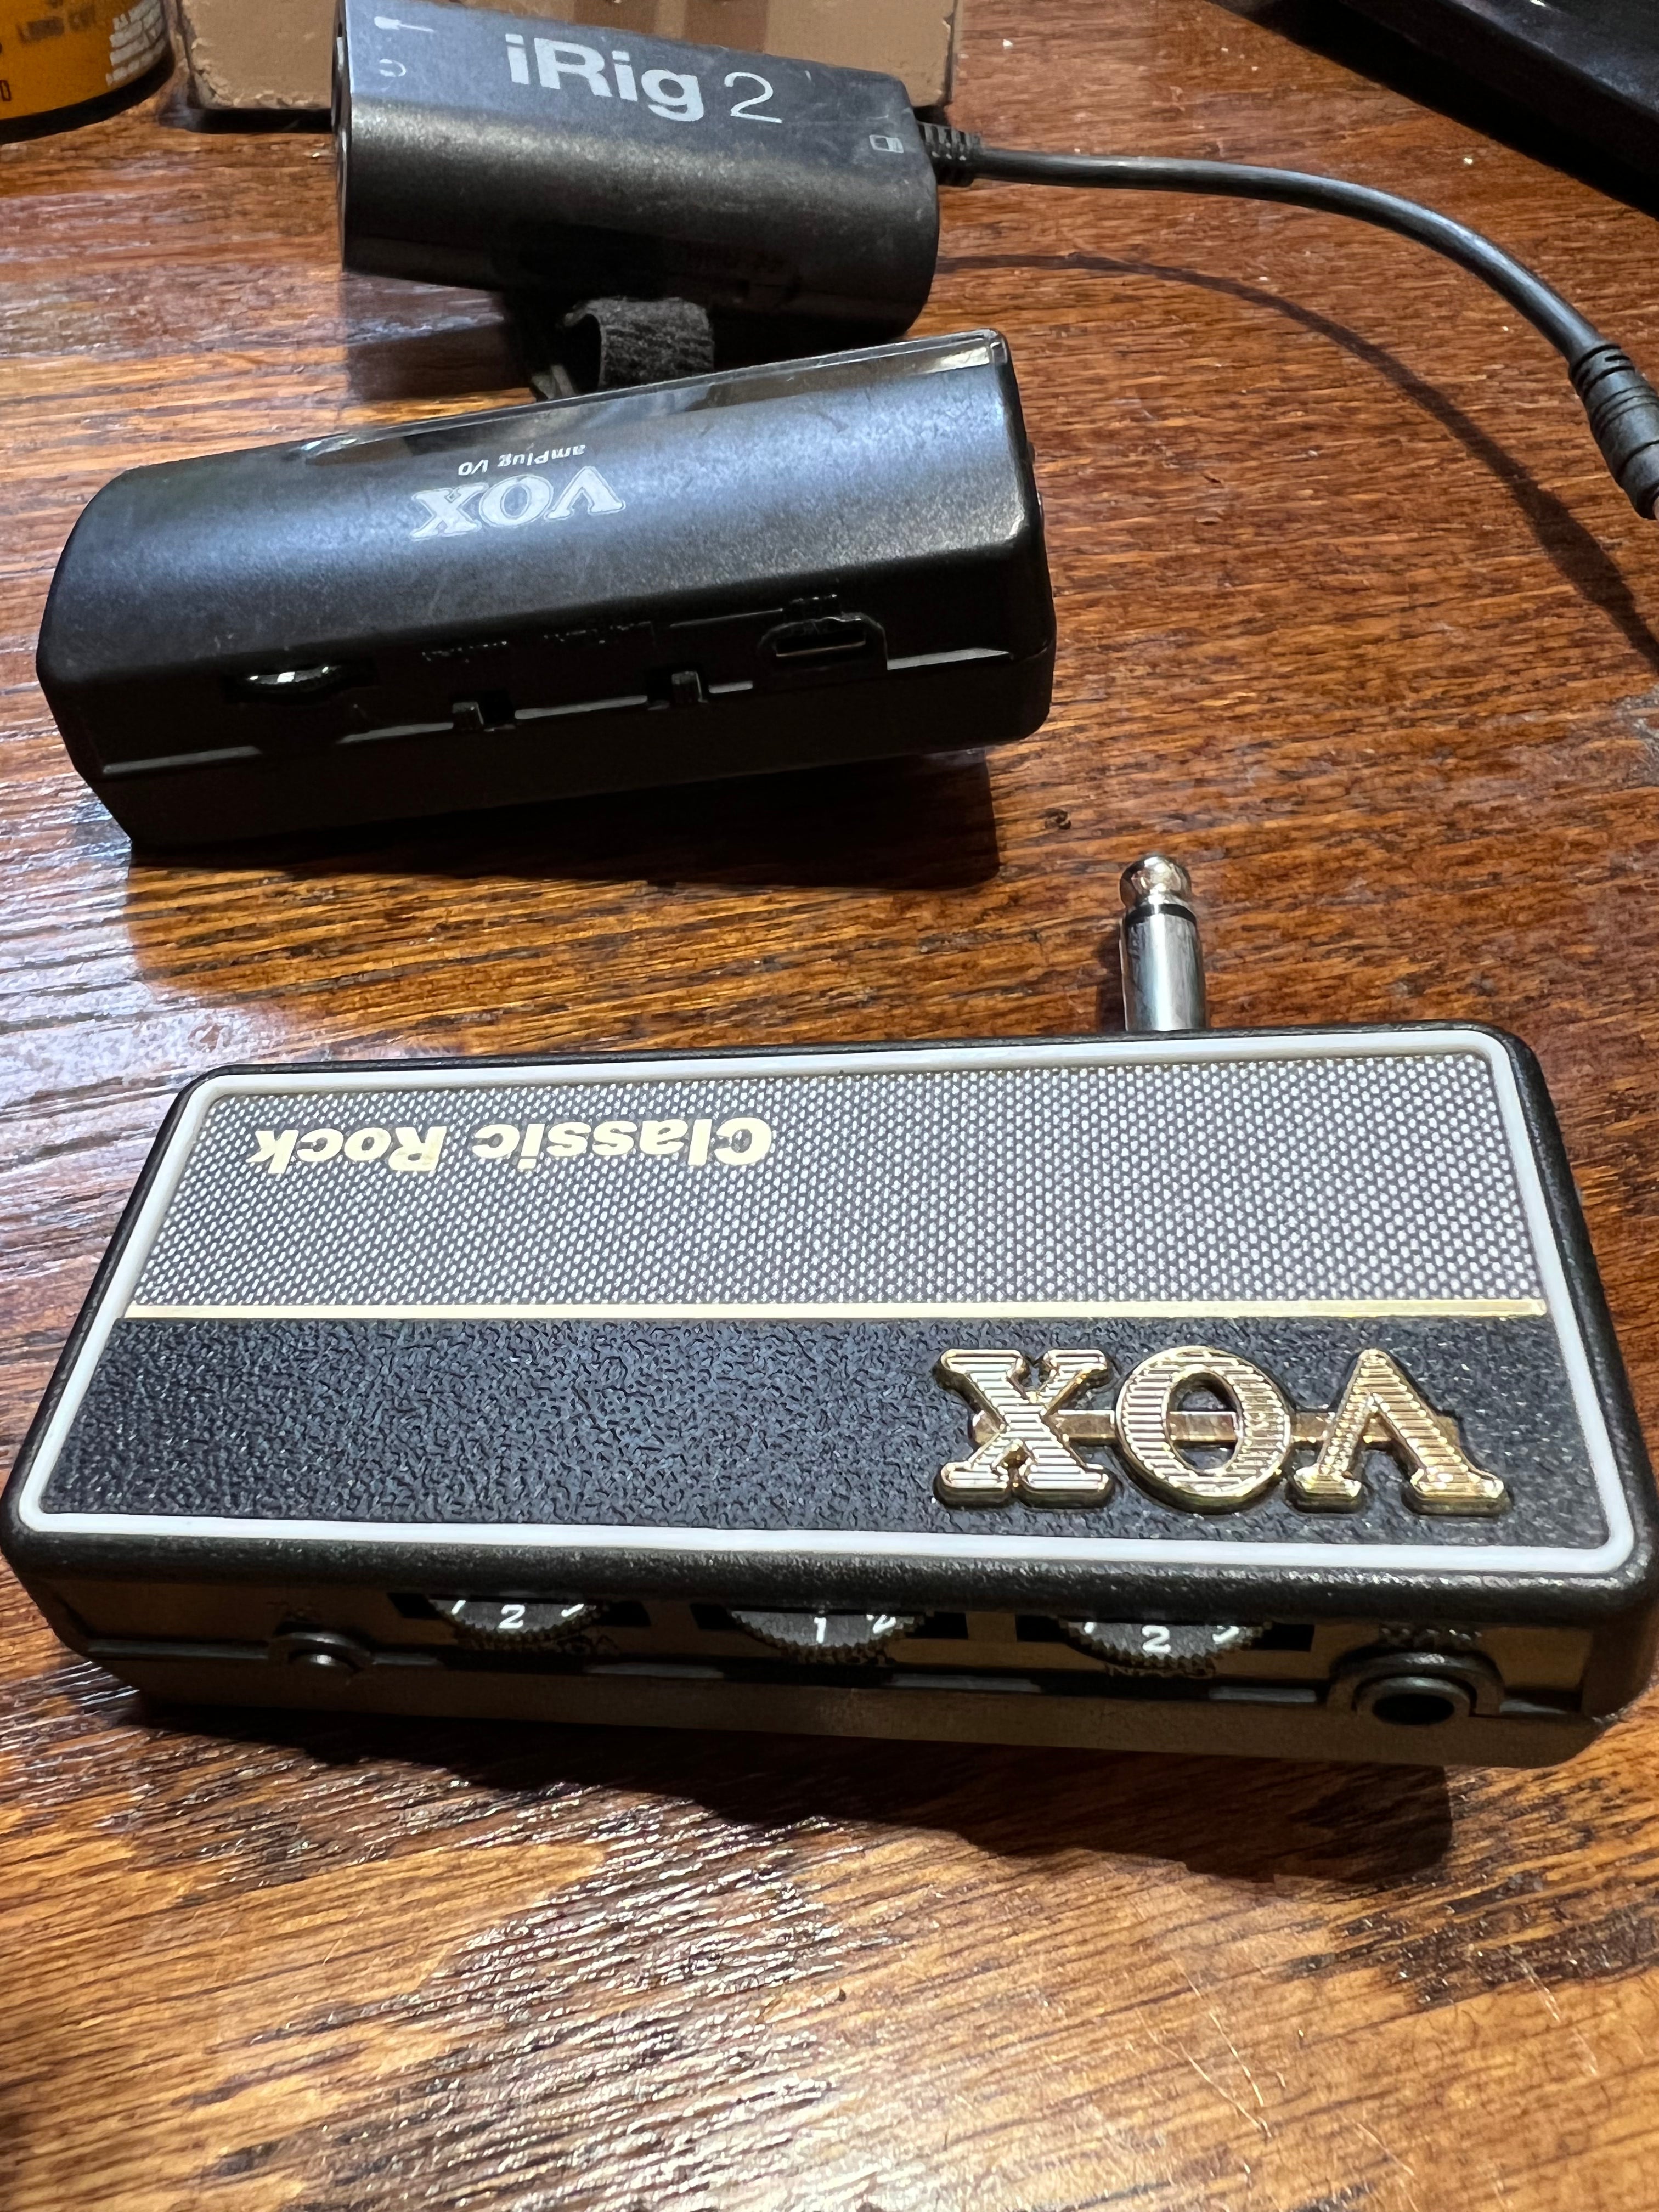  Vox amPlug 2 Headphone Guitar Amplifier - Classic Rock